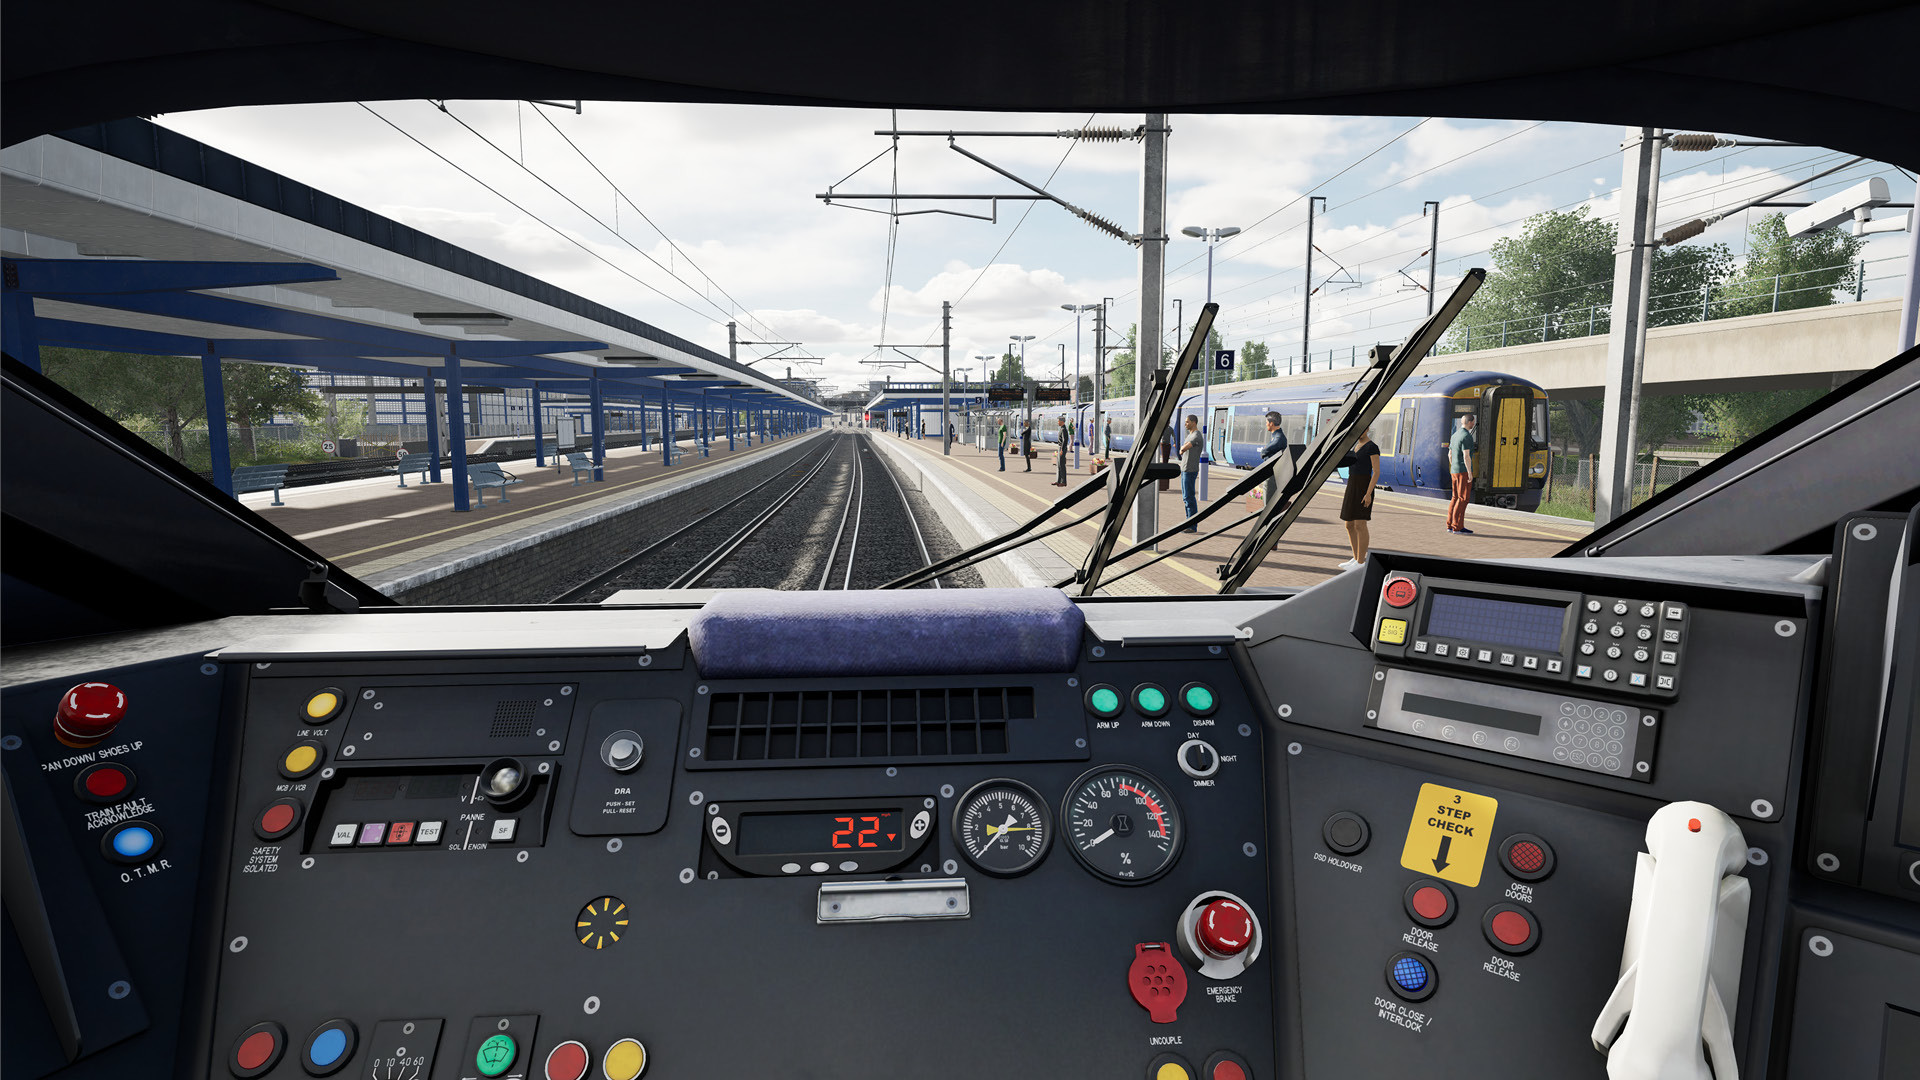 Train Sim World 3: Deluxe Edition Steam CD Key